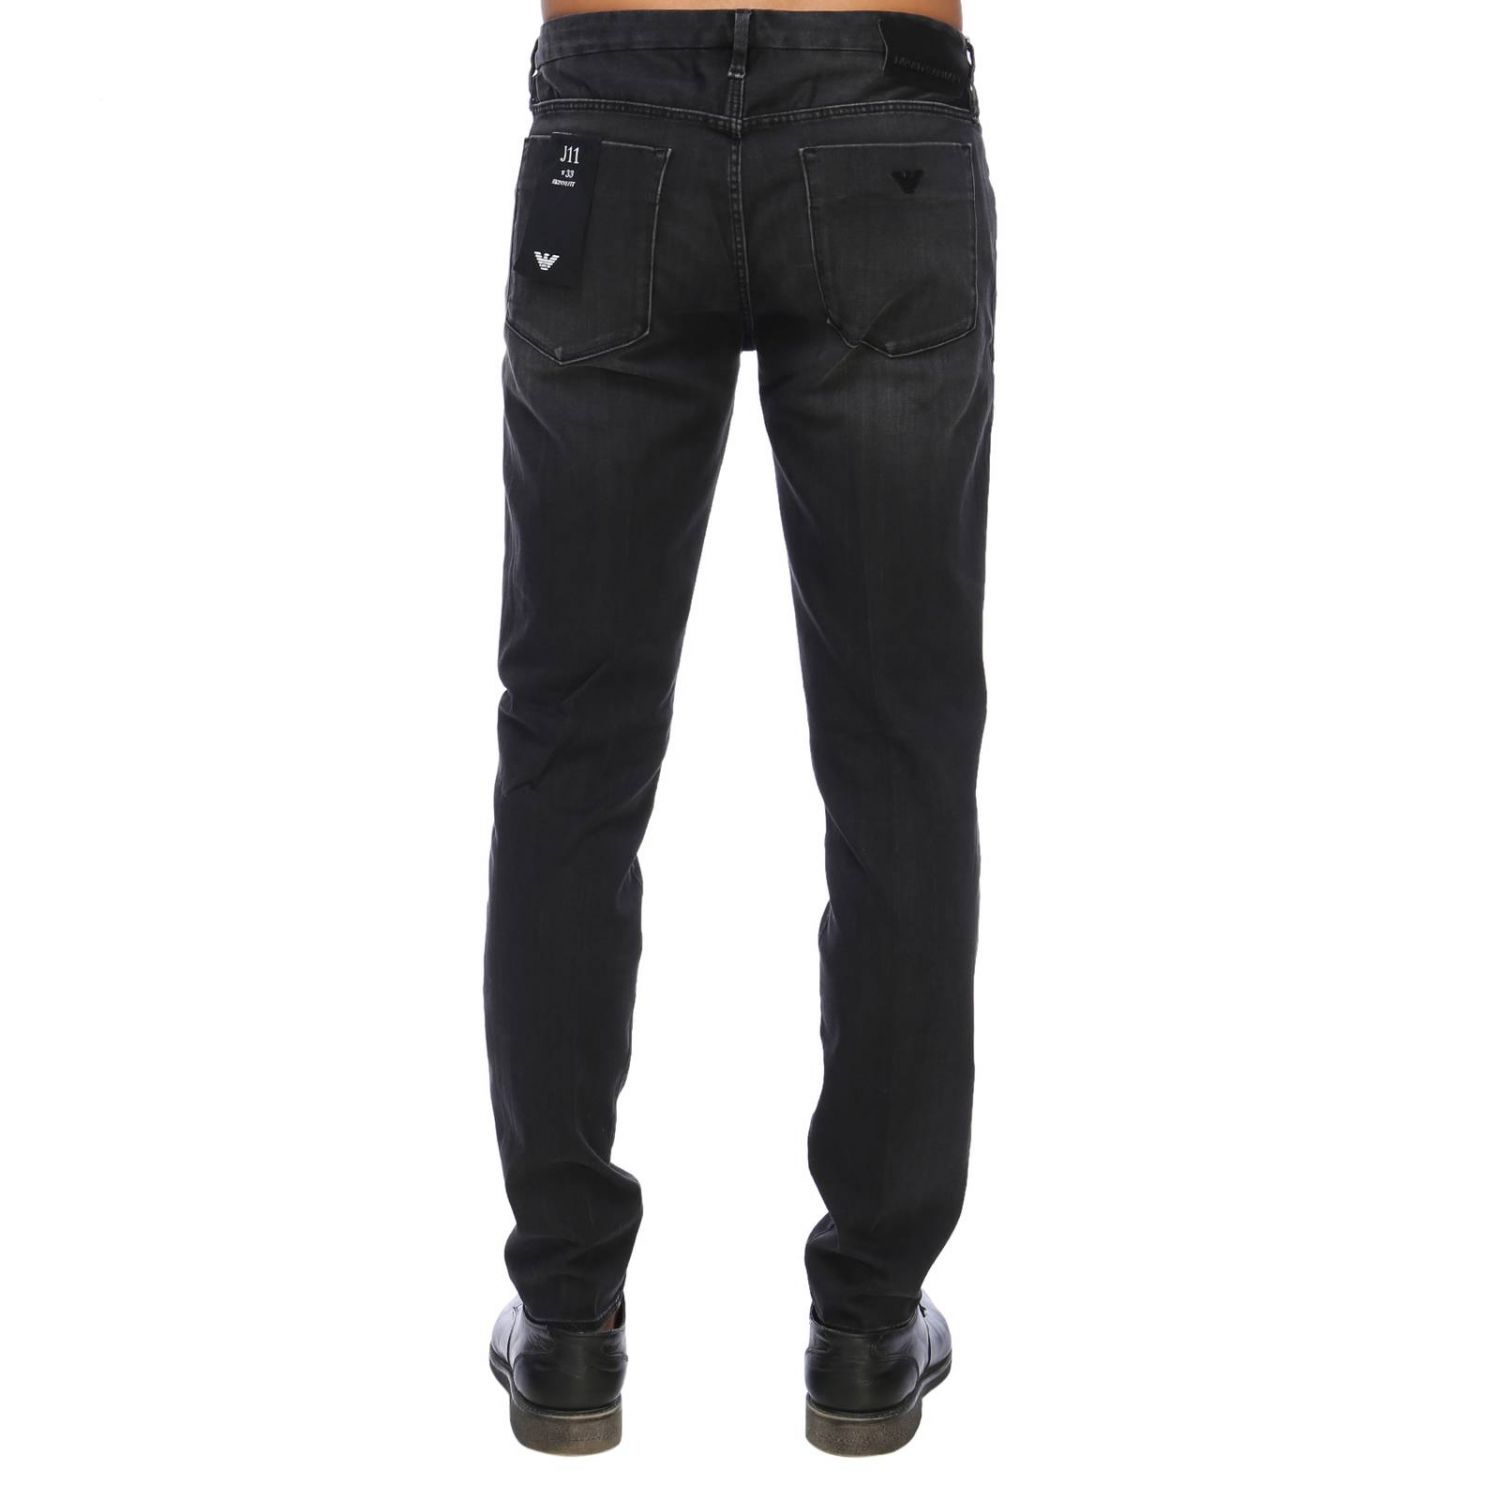 Emporio Armani Outlet: Jeans men - Black | Jeans Emporio Armani 6Z1J11 ...